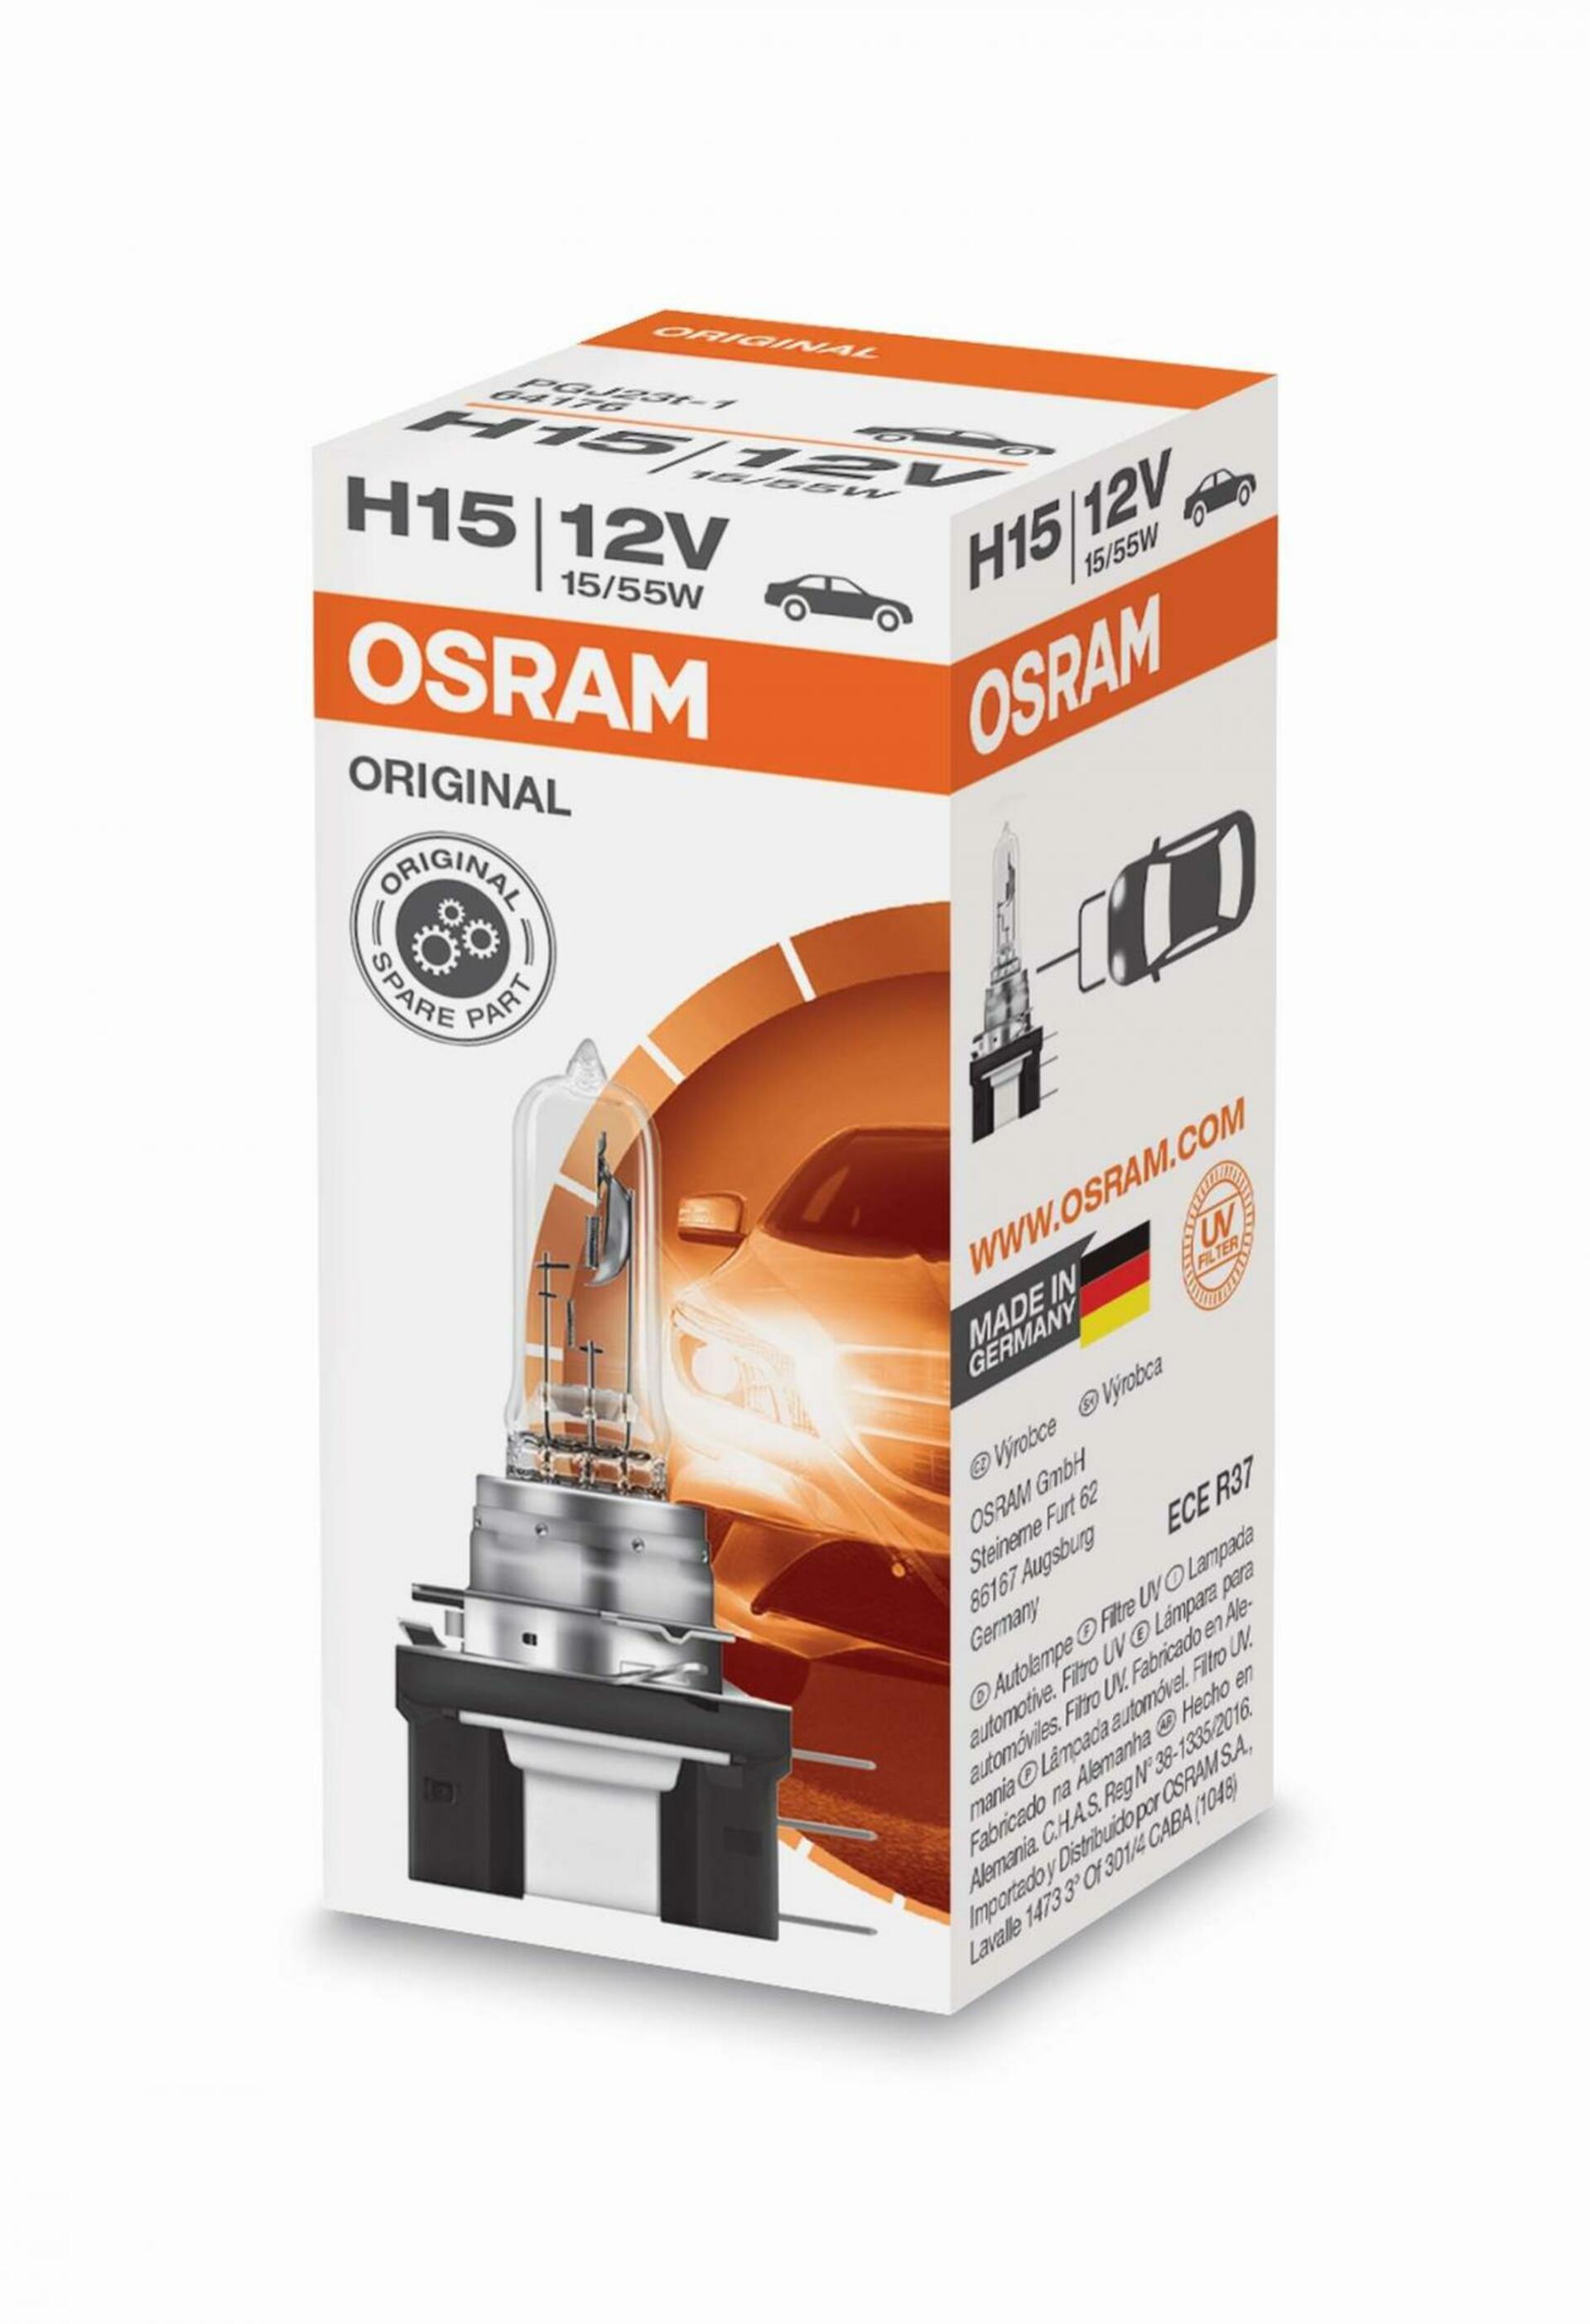 OSRAM H15 12V 15/55W 64176 PGJ23t-1